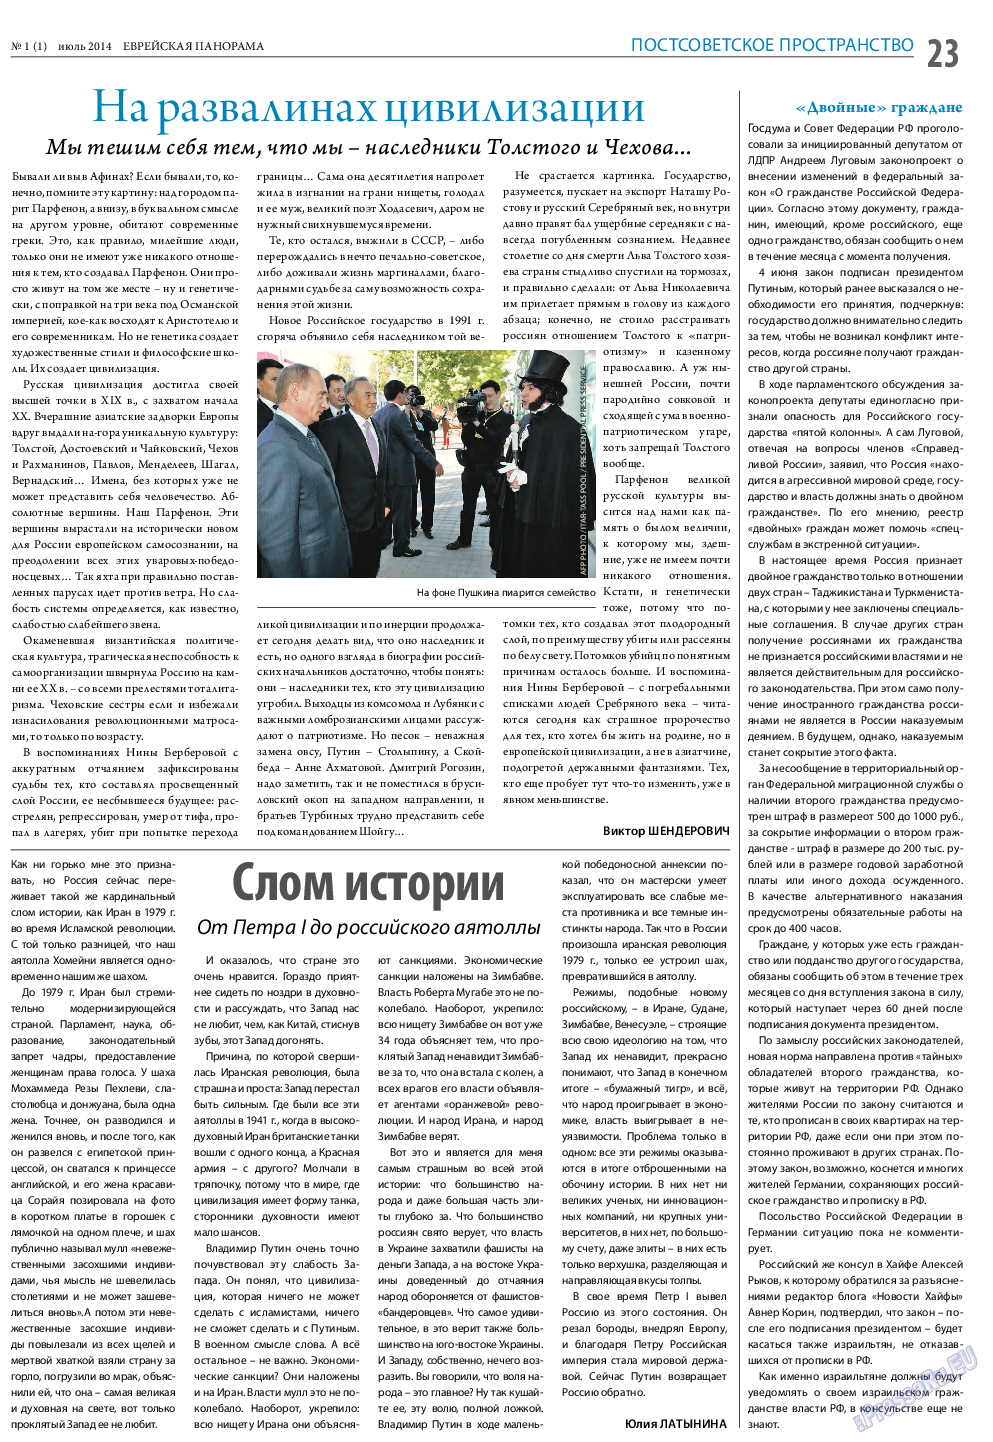 Еврейская панорама, газета. 2014 №1 стр.23